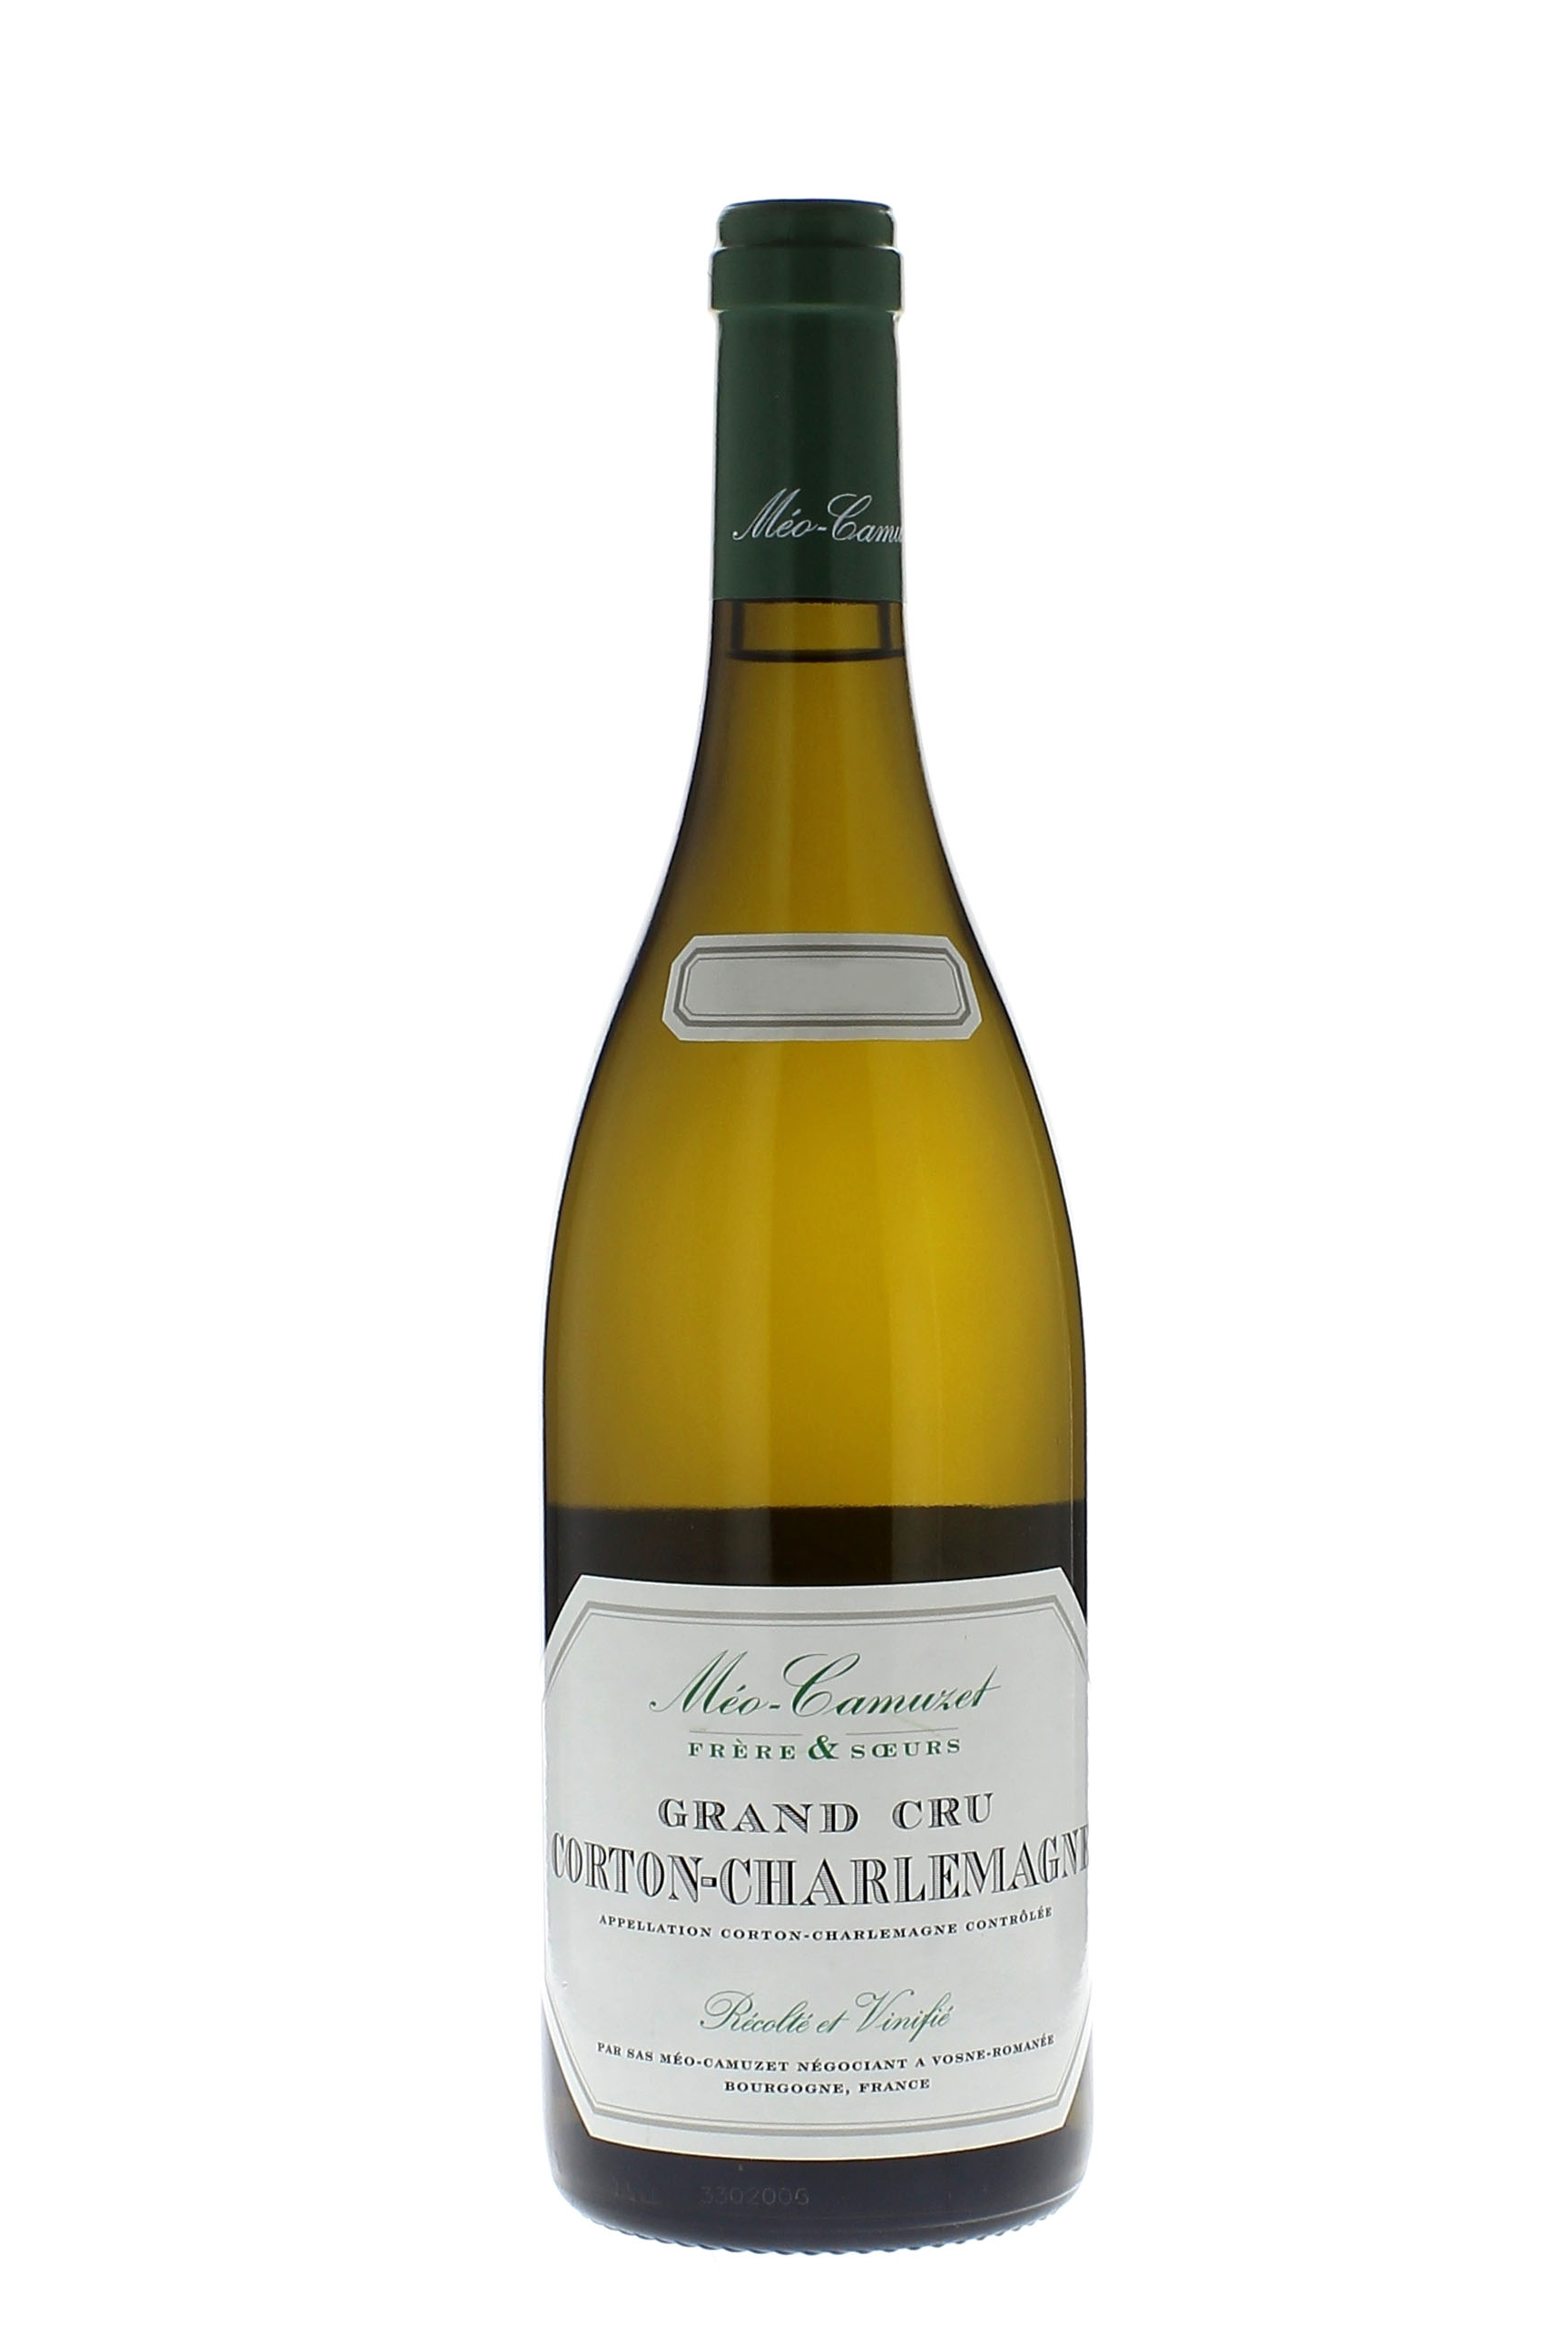 Corton charlemagne grand cru 2017  MEO-CAMUZET Frre et S., Bourgogne blanc